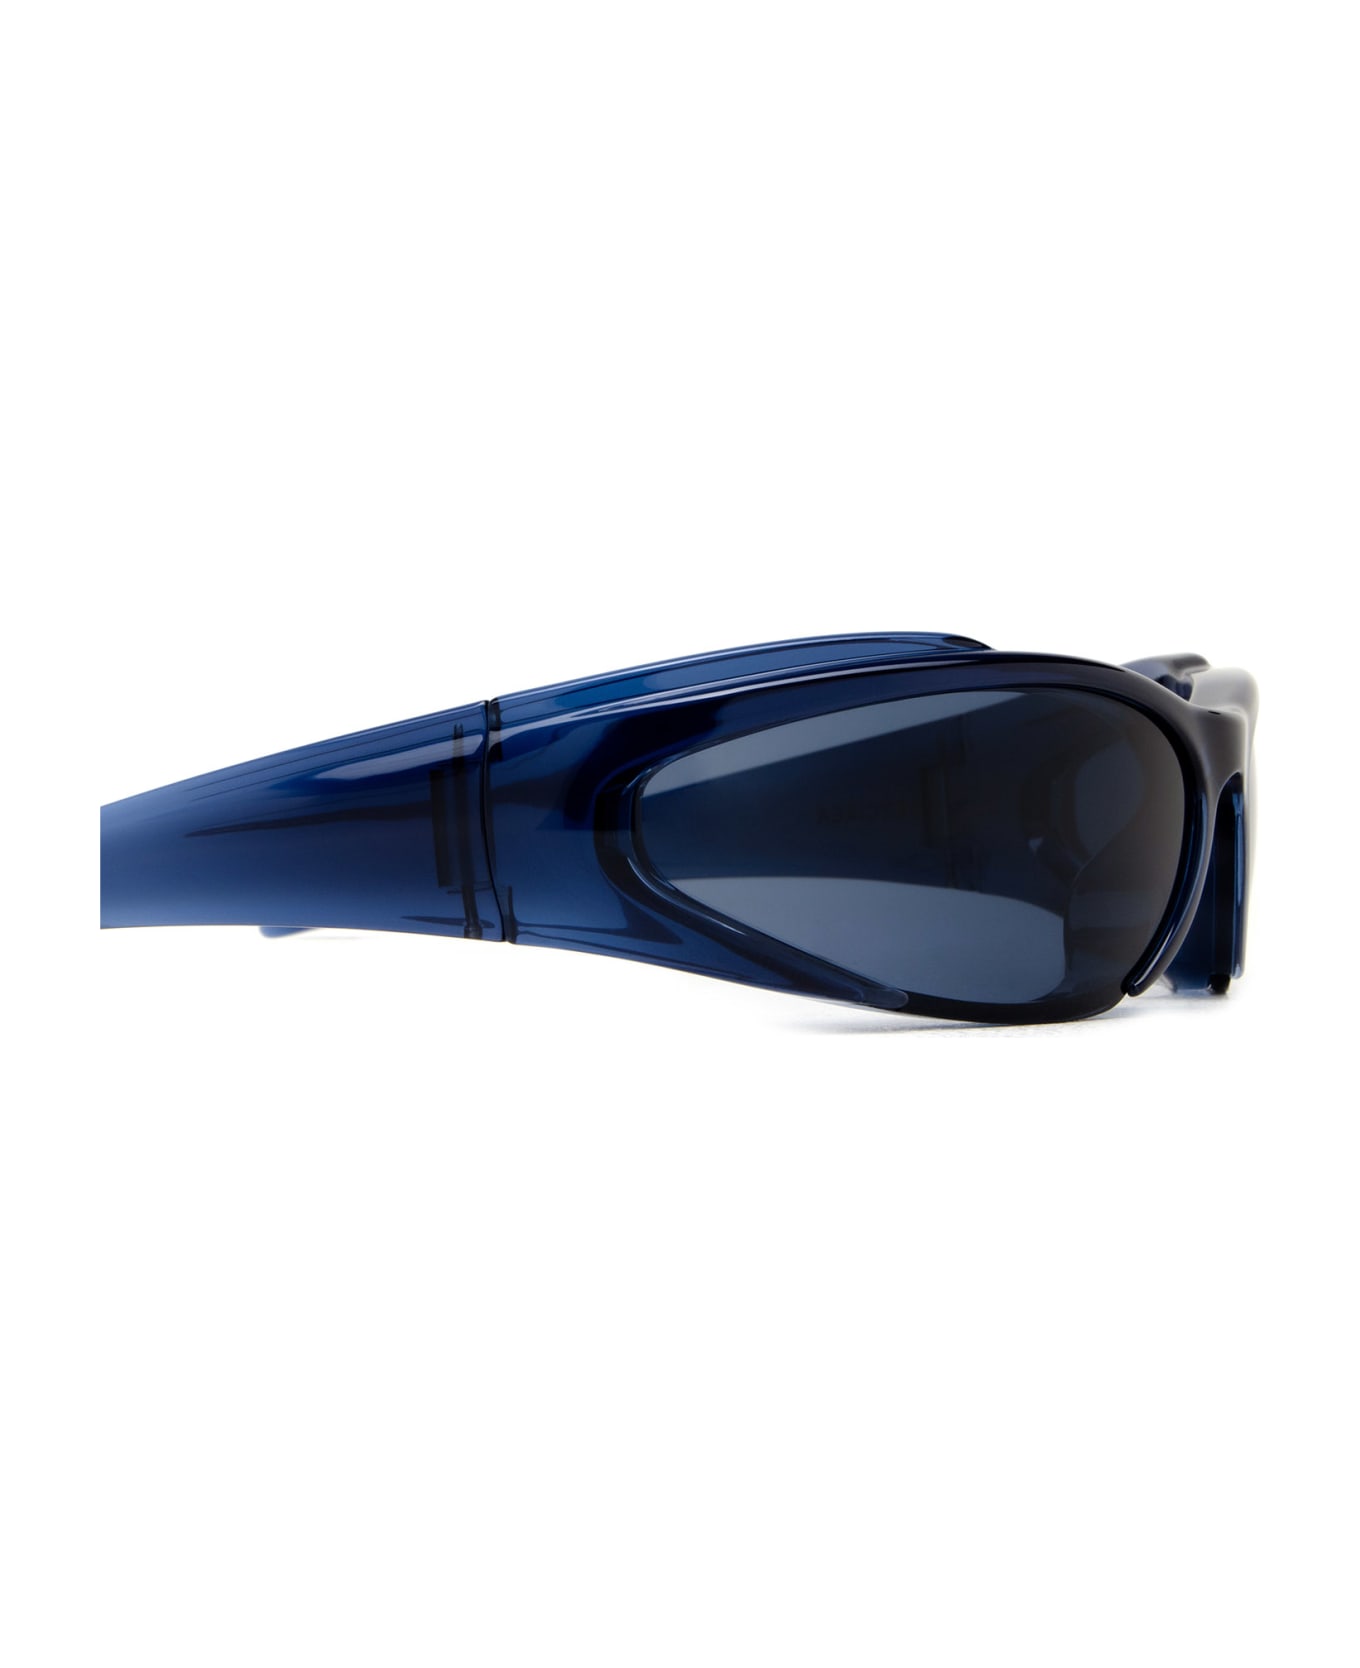 Balenciaga Eyewear Bb0253s Sunglasses - Blue